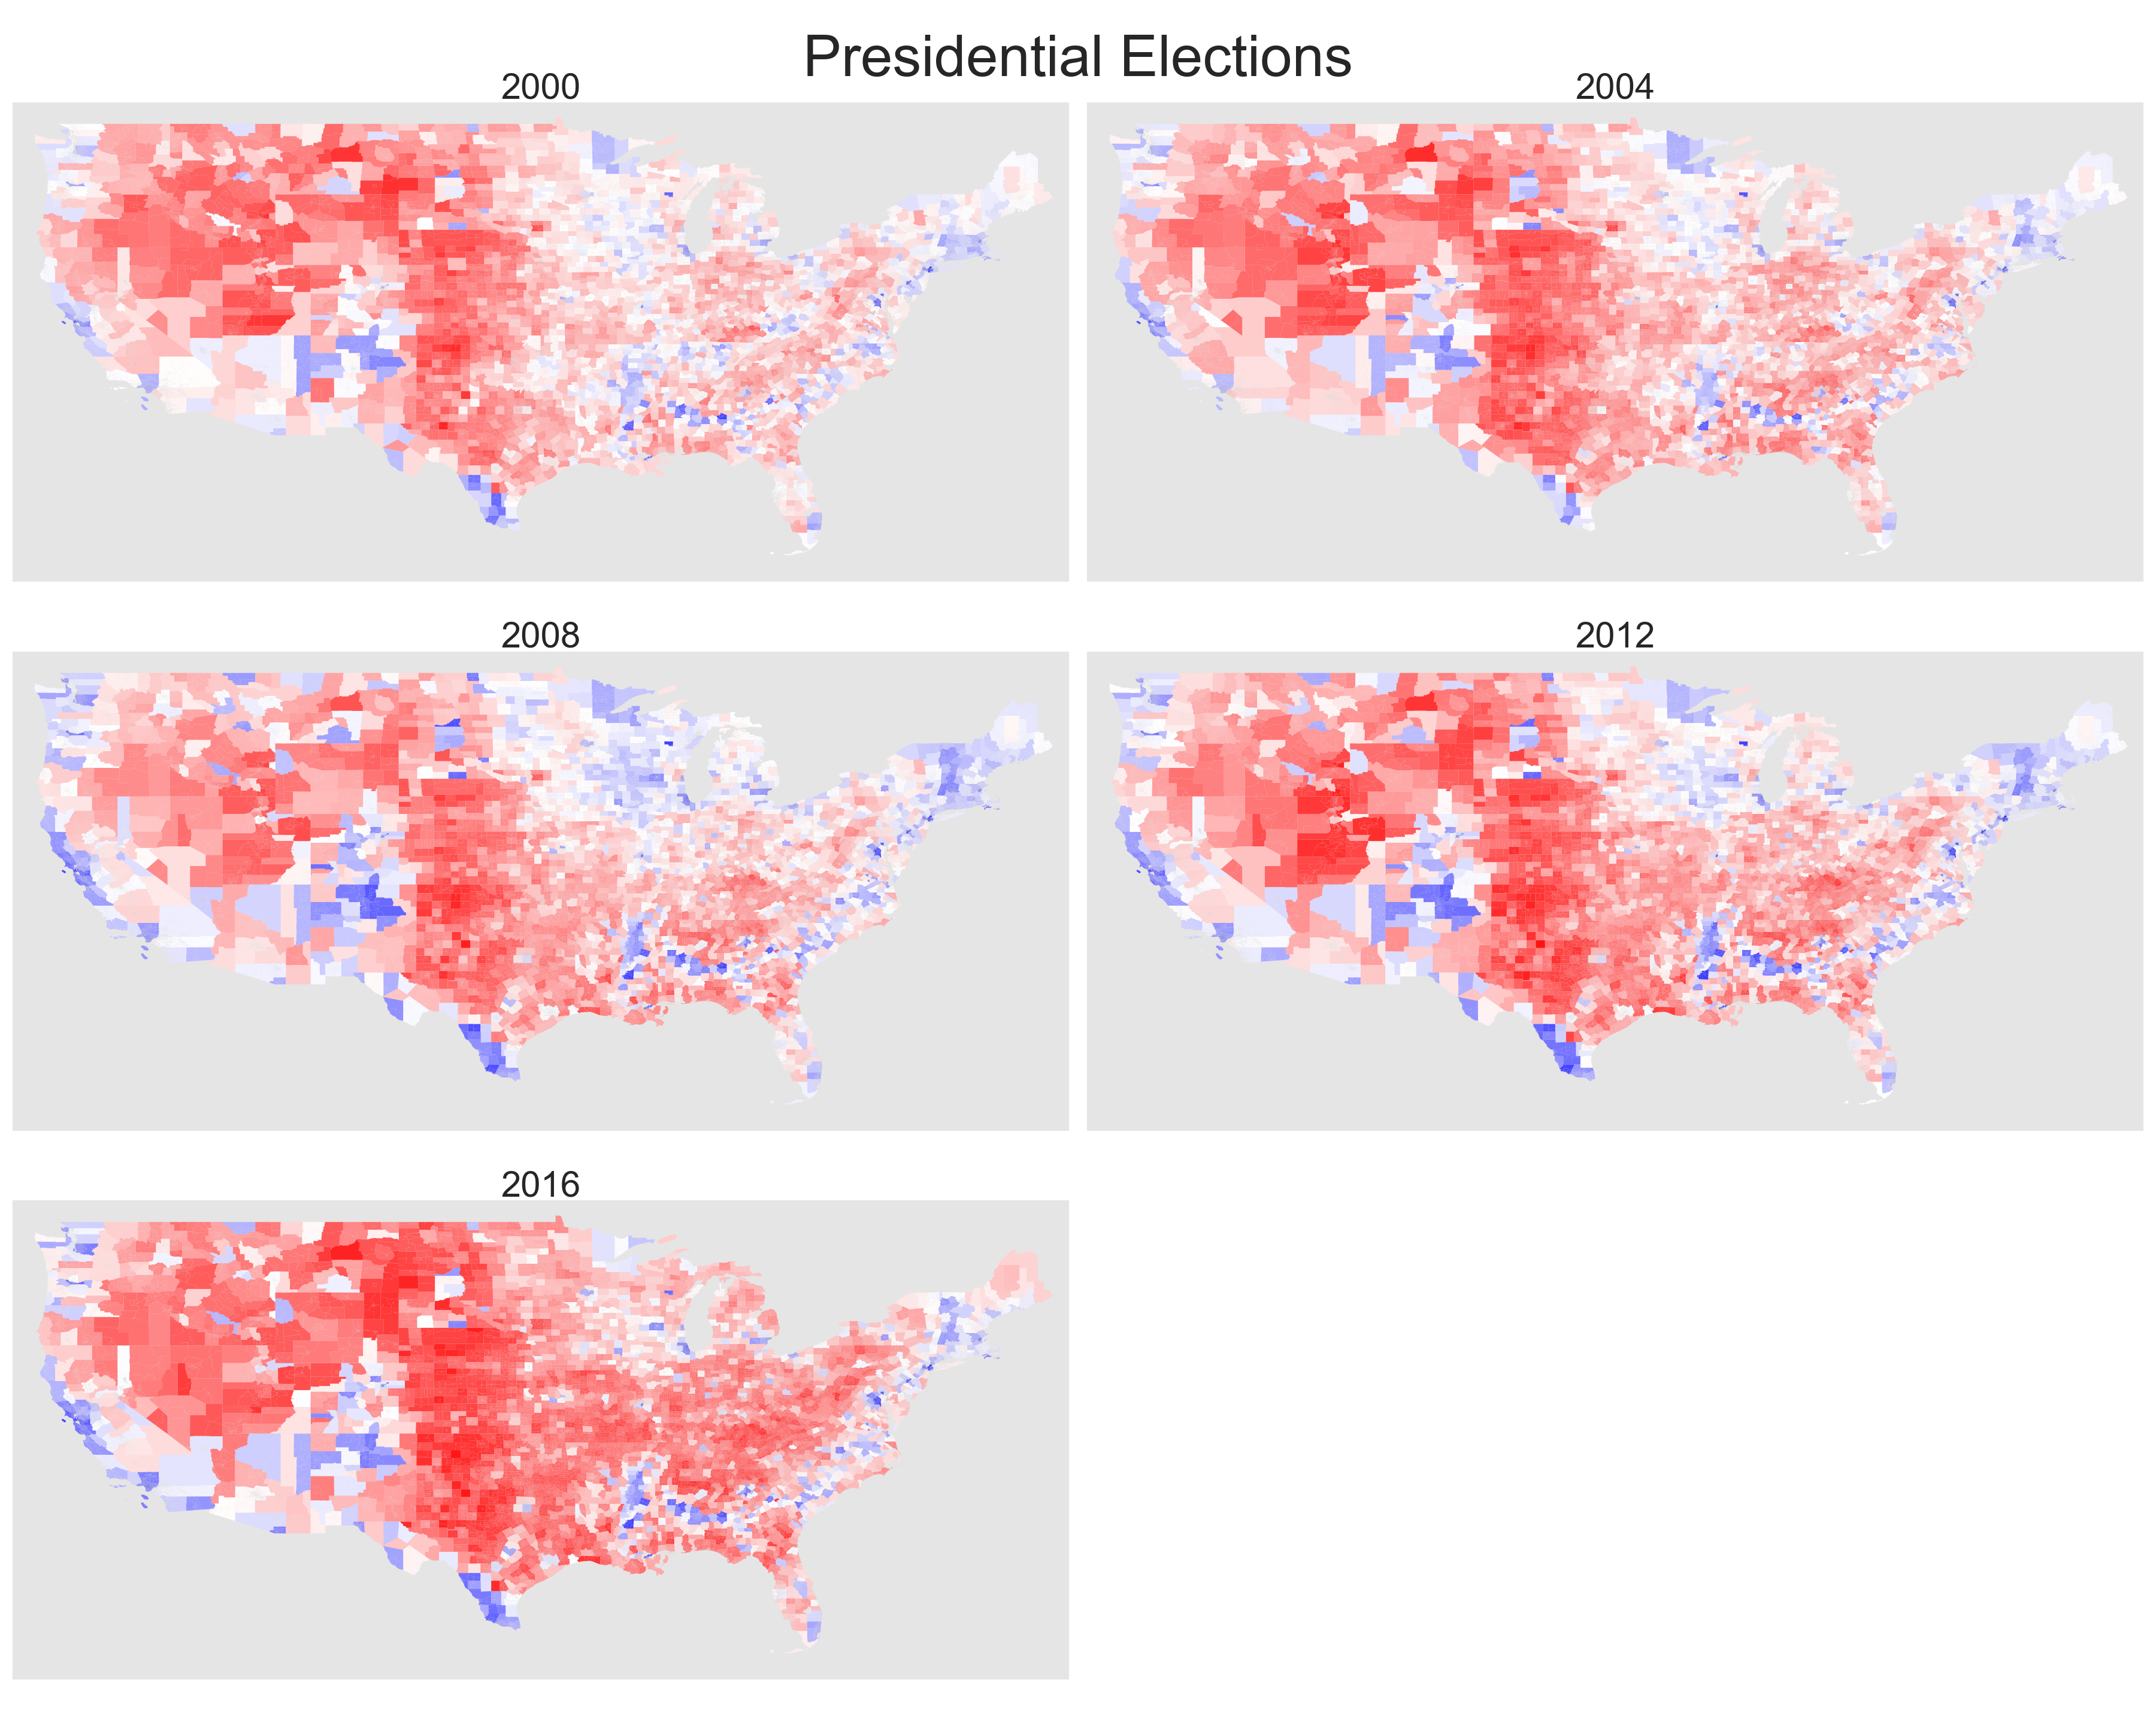 2012 Republican Presidential Candidates Comparison Chart